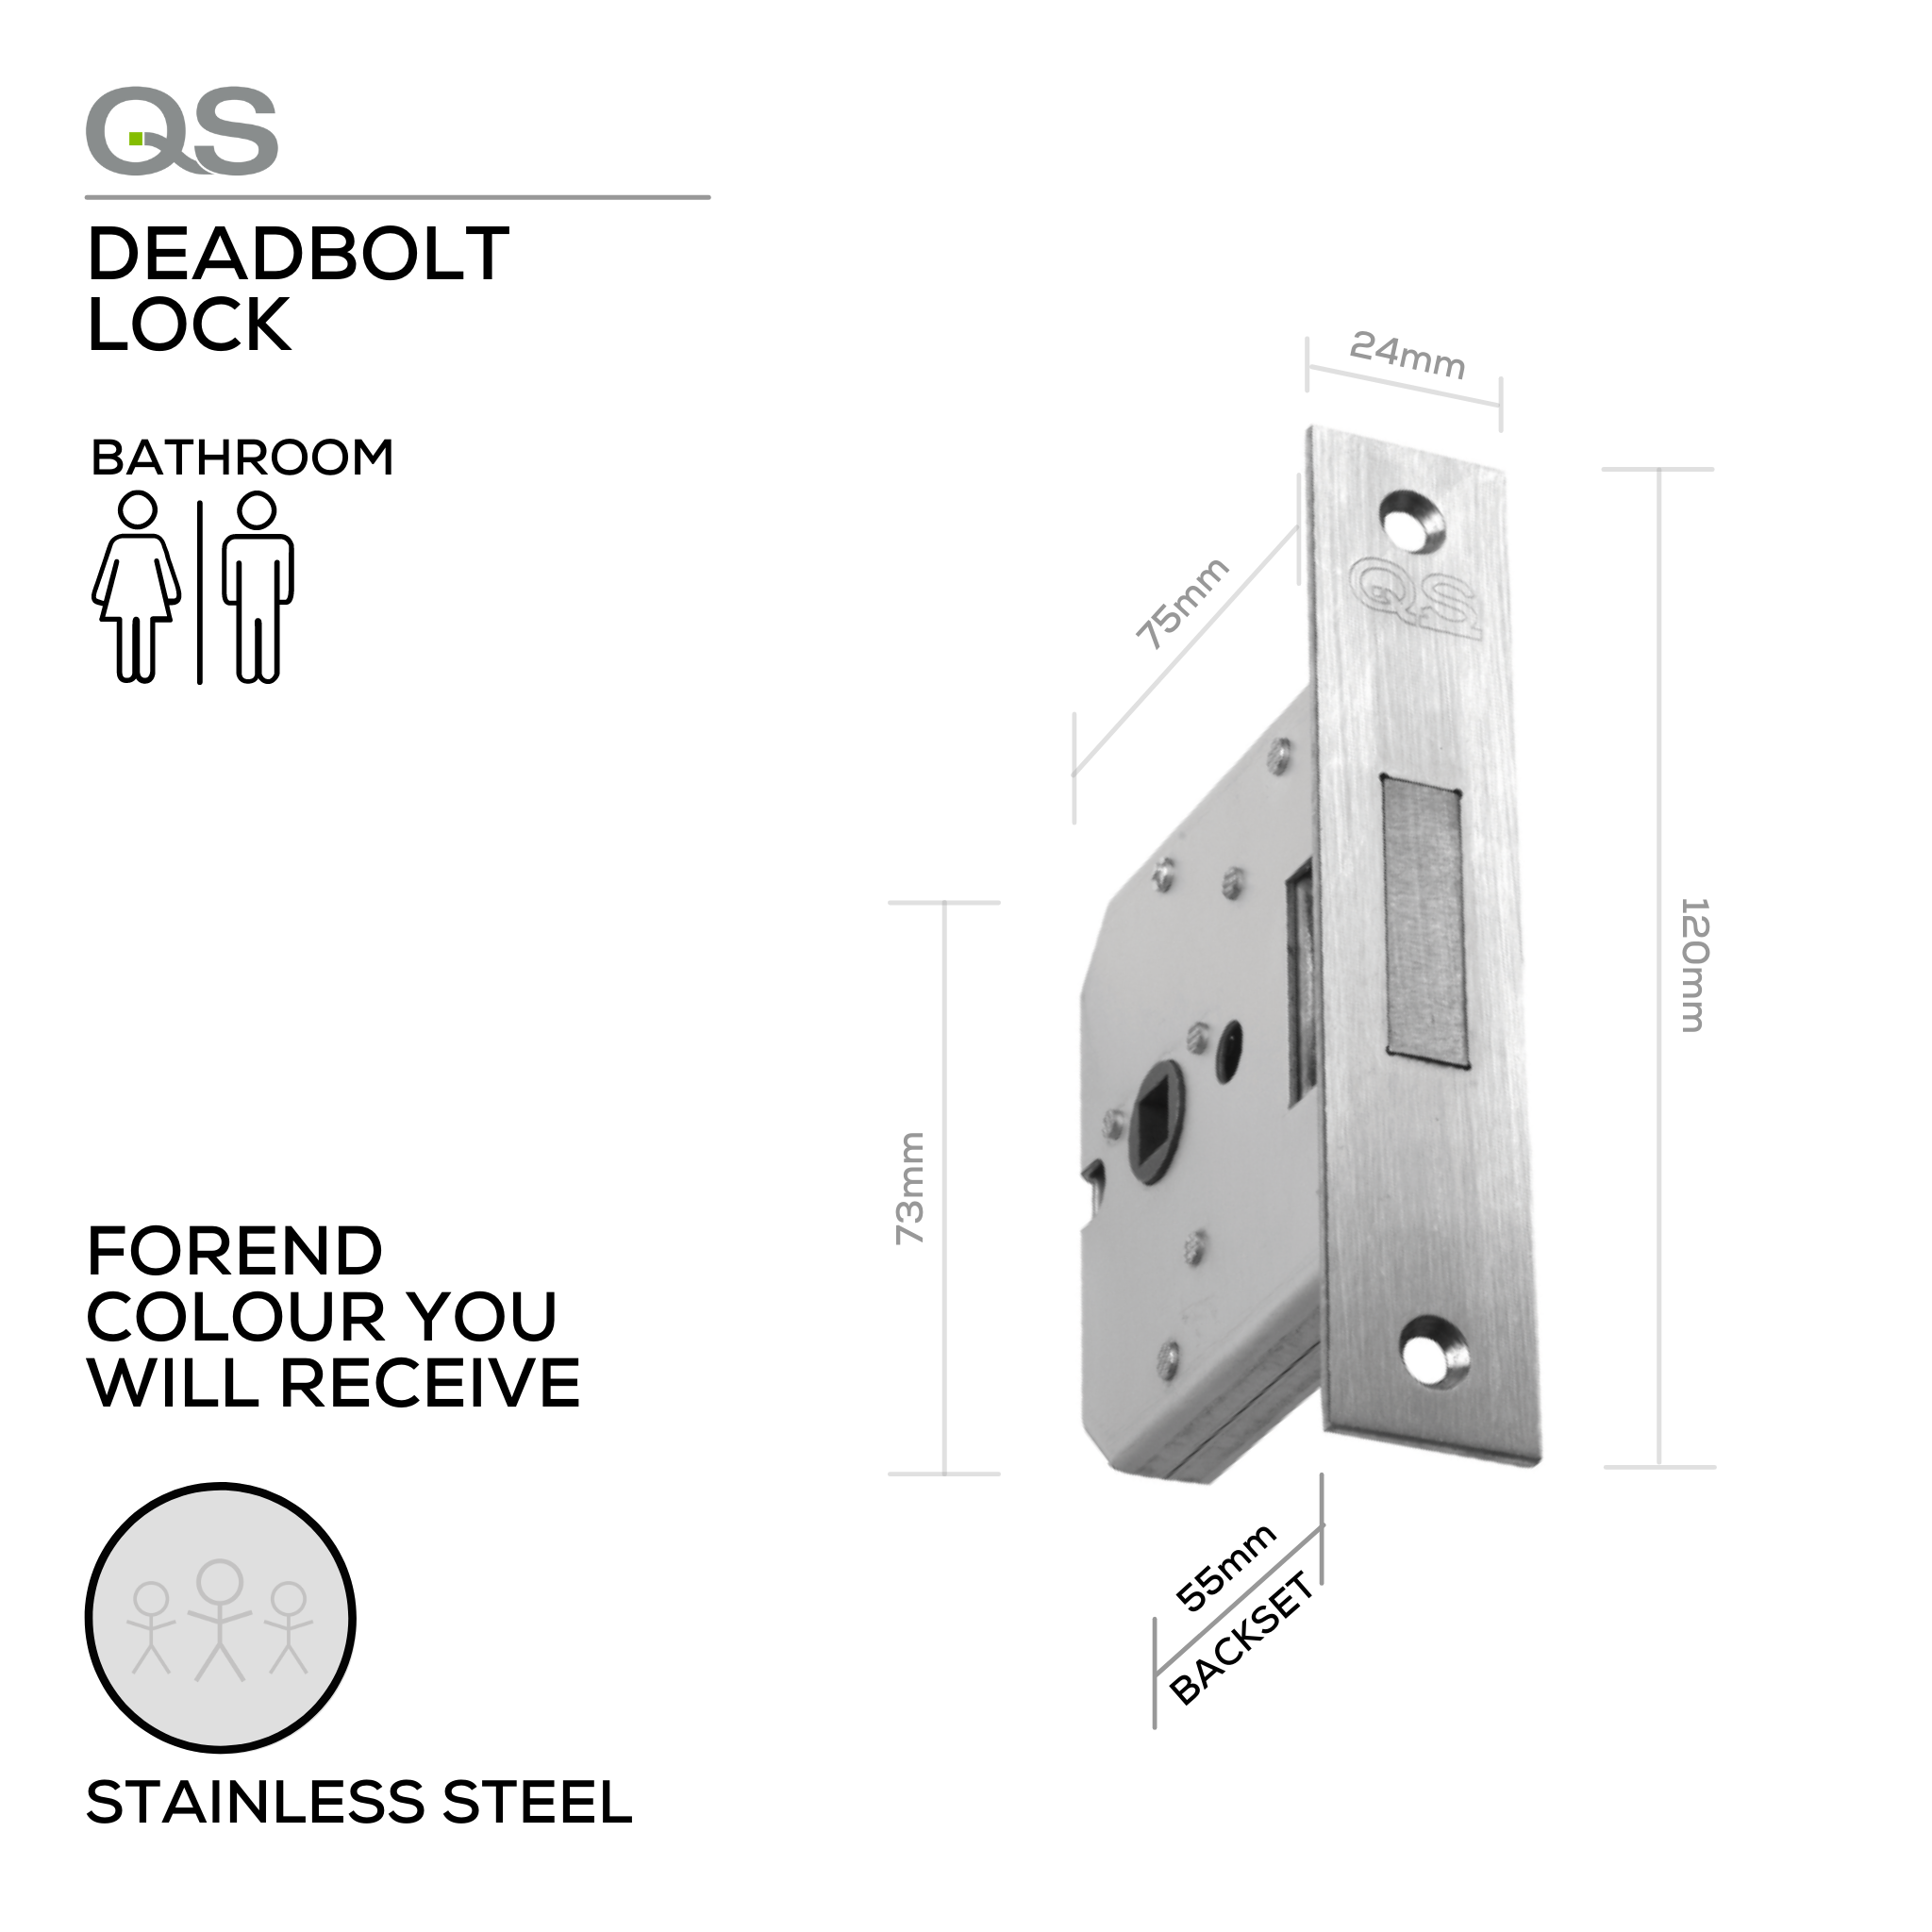 QS0055/5, Bathroom, Deadbolt Lock, WC Thumbturn Hardware, 55mm (Backset), Stainless Steel, QS